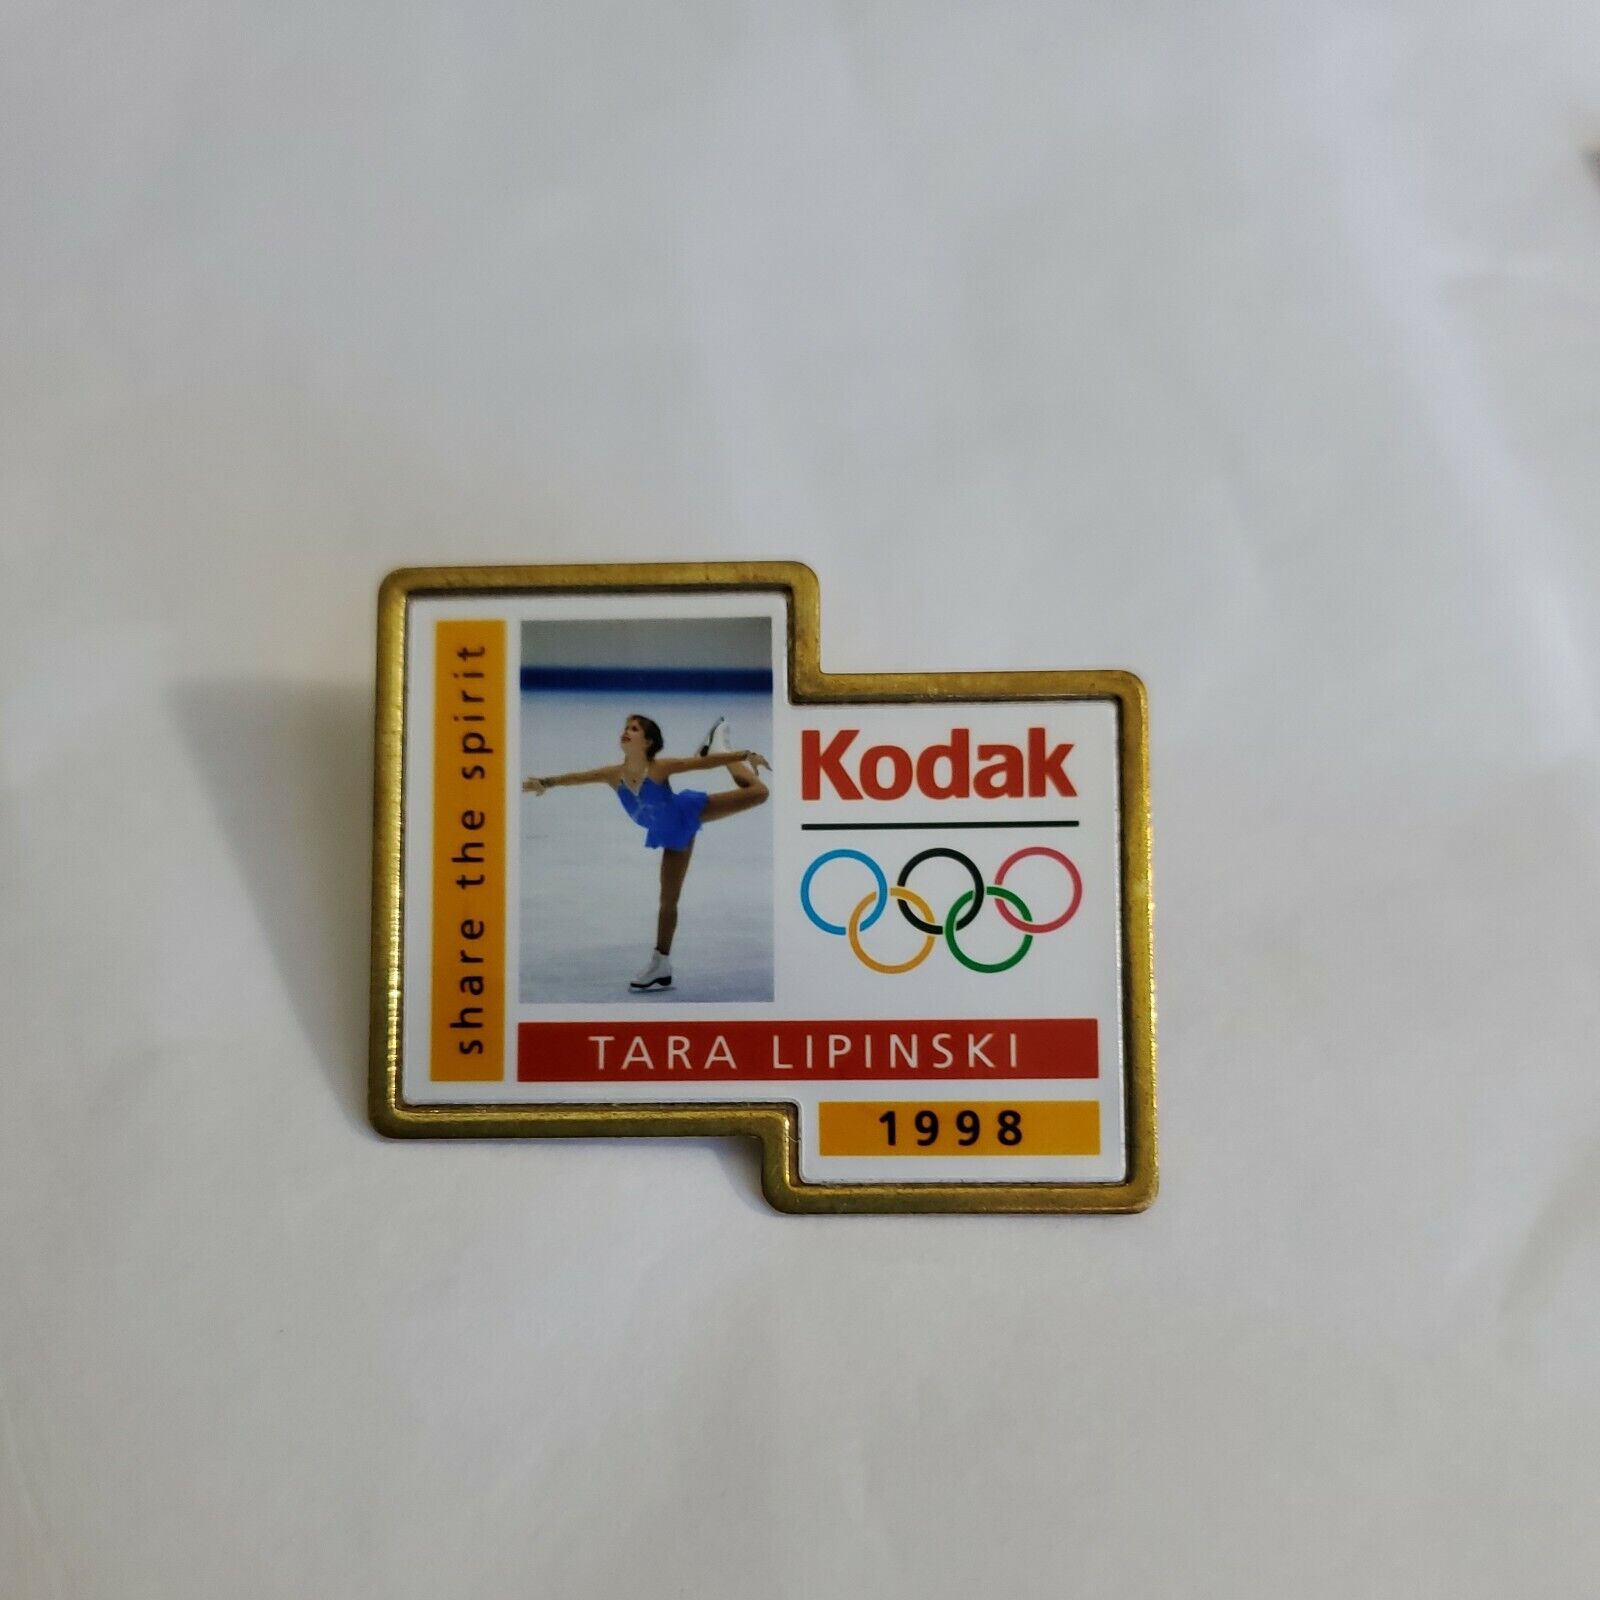 Kodak Tara Lipinski Olympic 1998 Skating Gold Medal Winner Nagano Japan